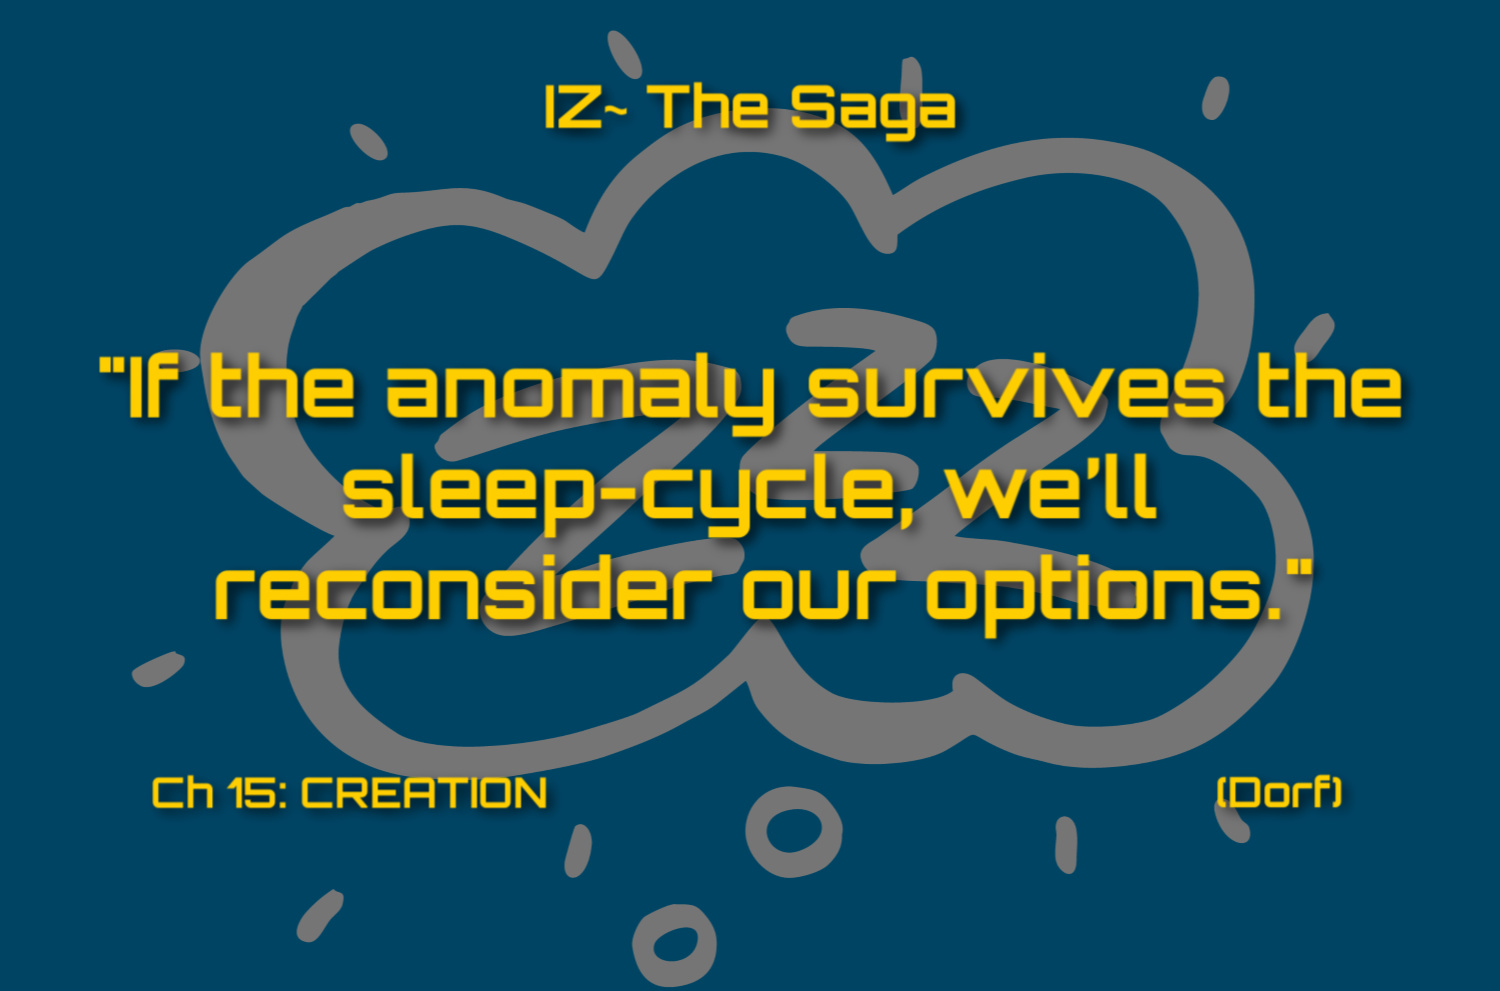 sleep cycle Ch 15.jpg